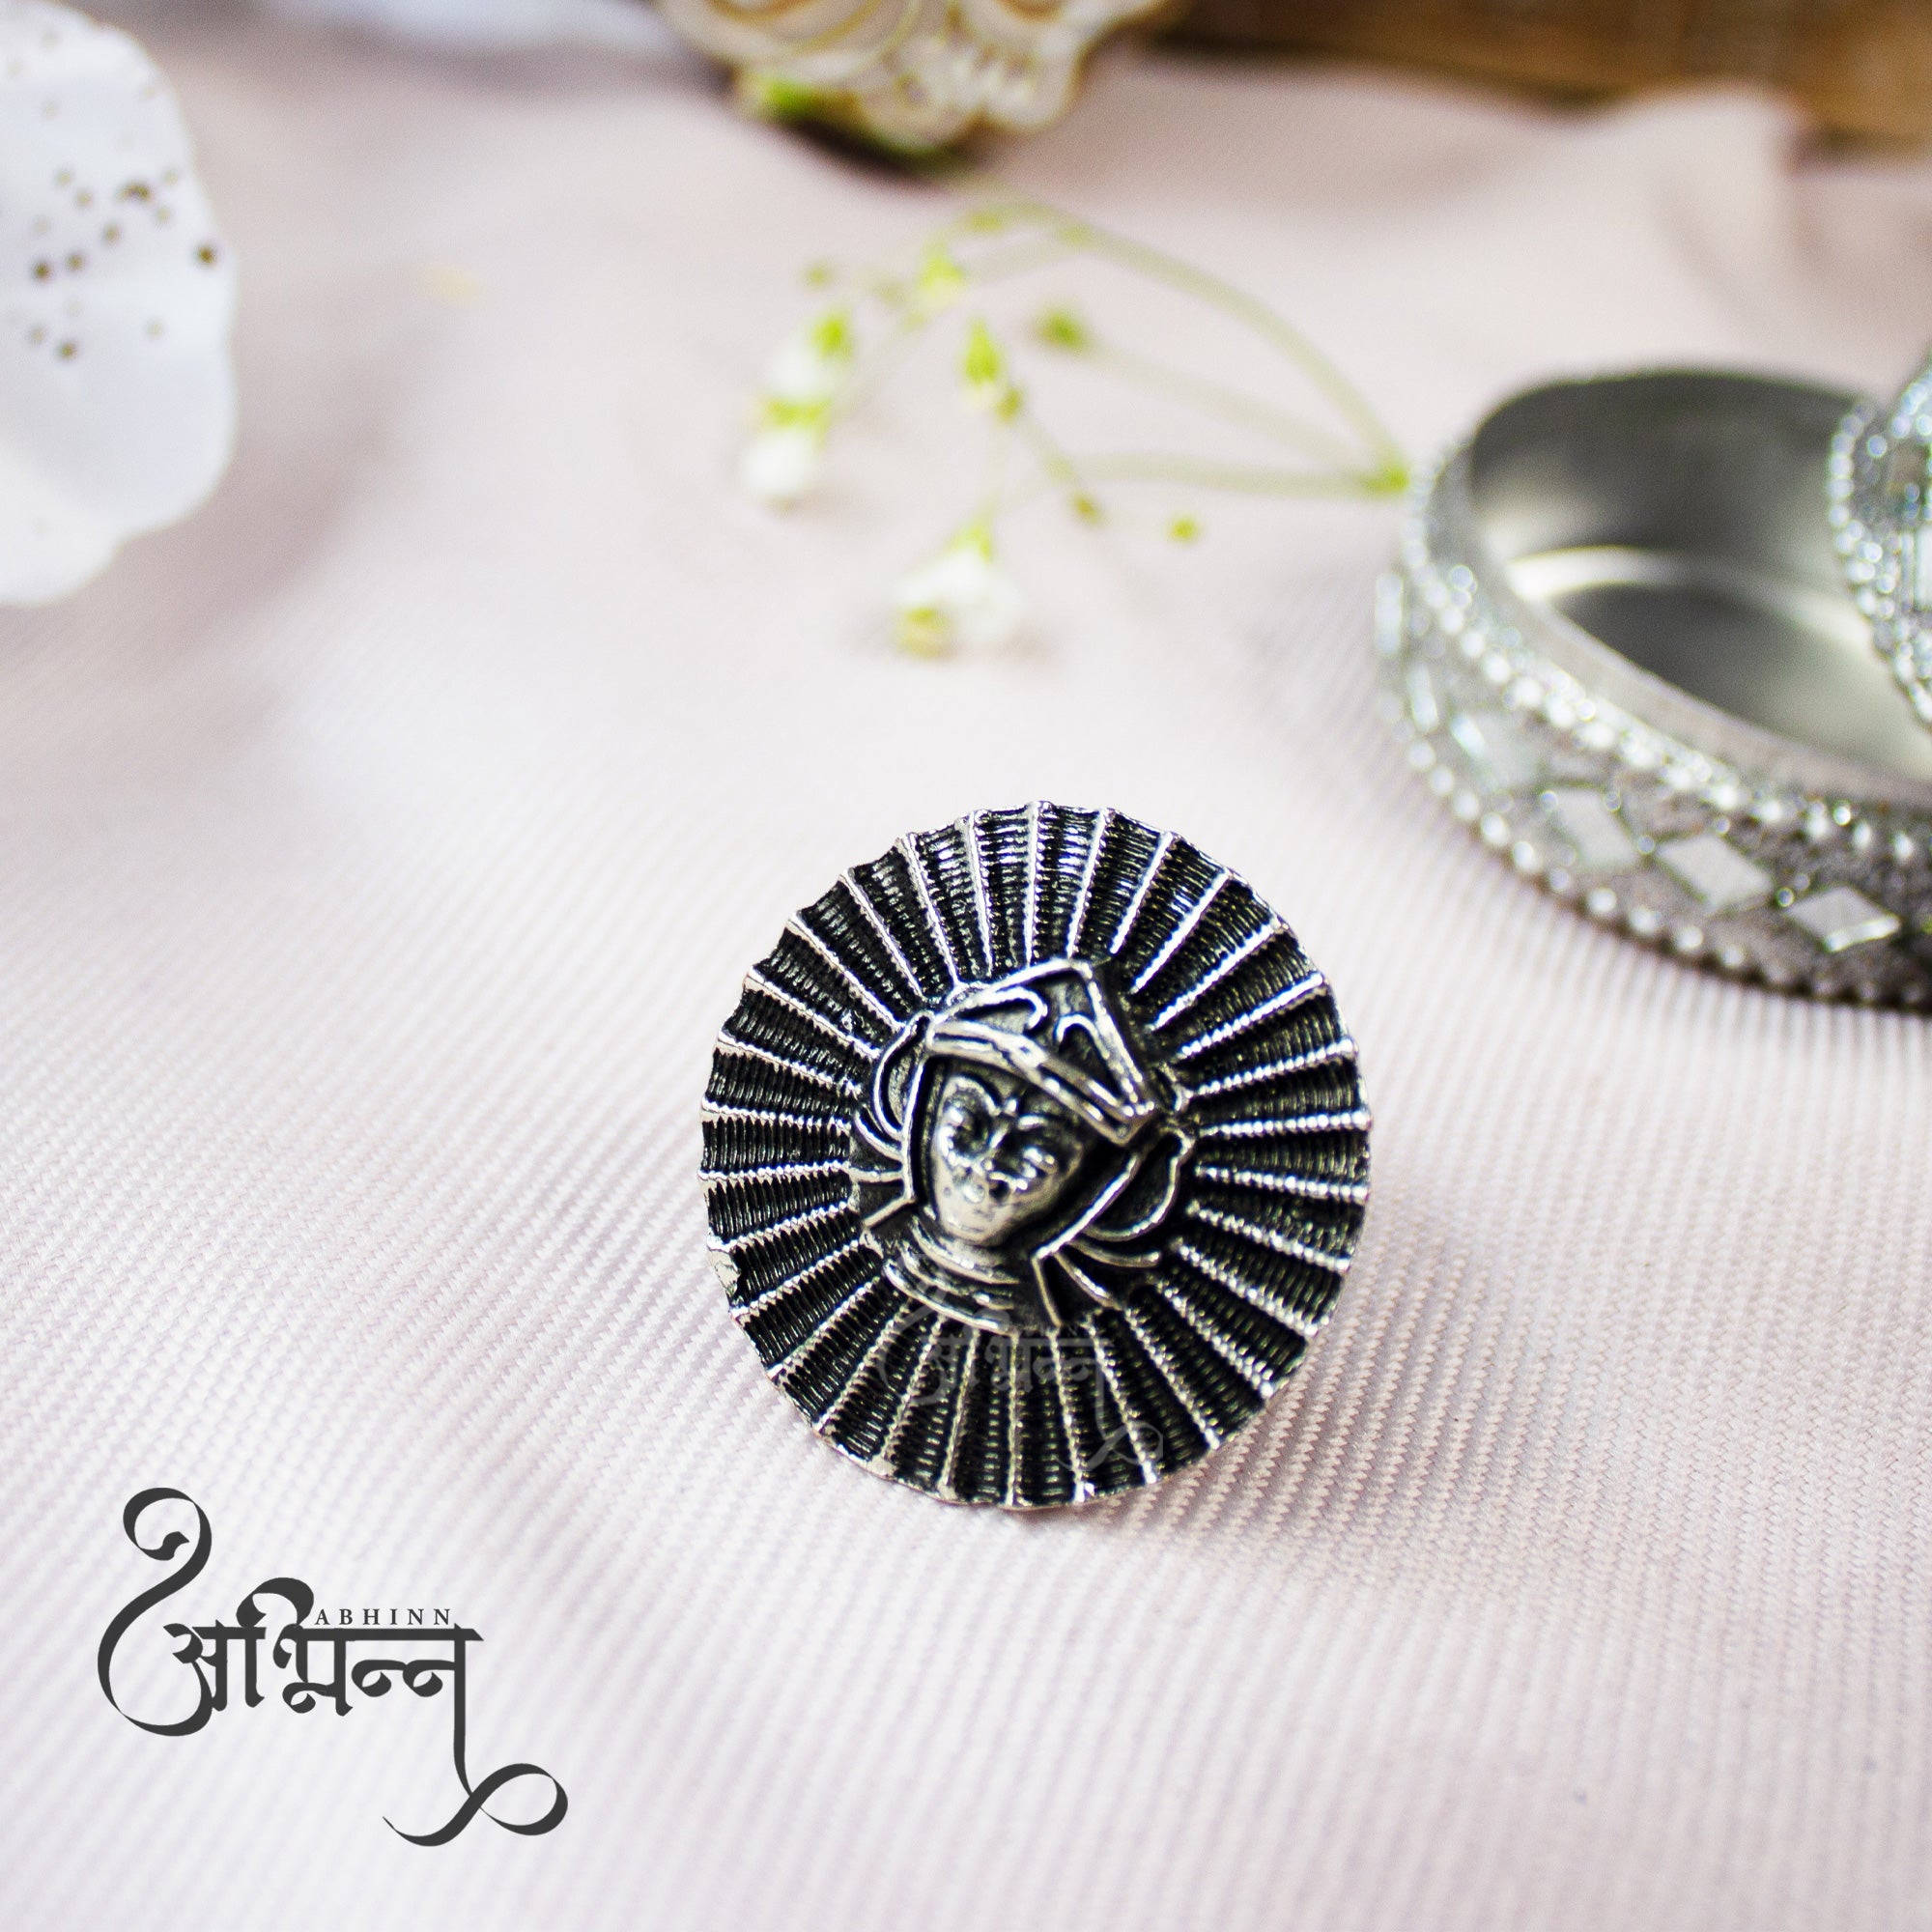 Abhinn Antique Silver Oxidised Durga Design Ring For Women